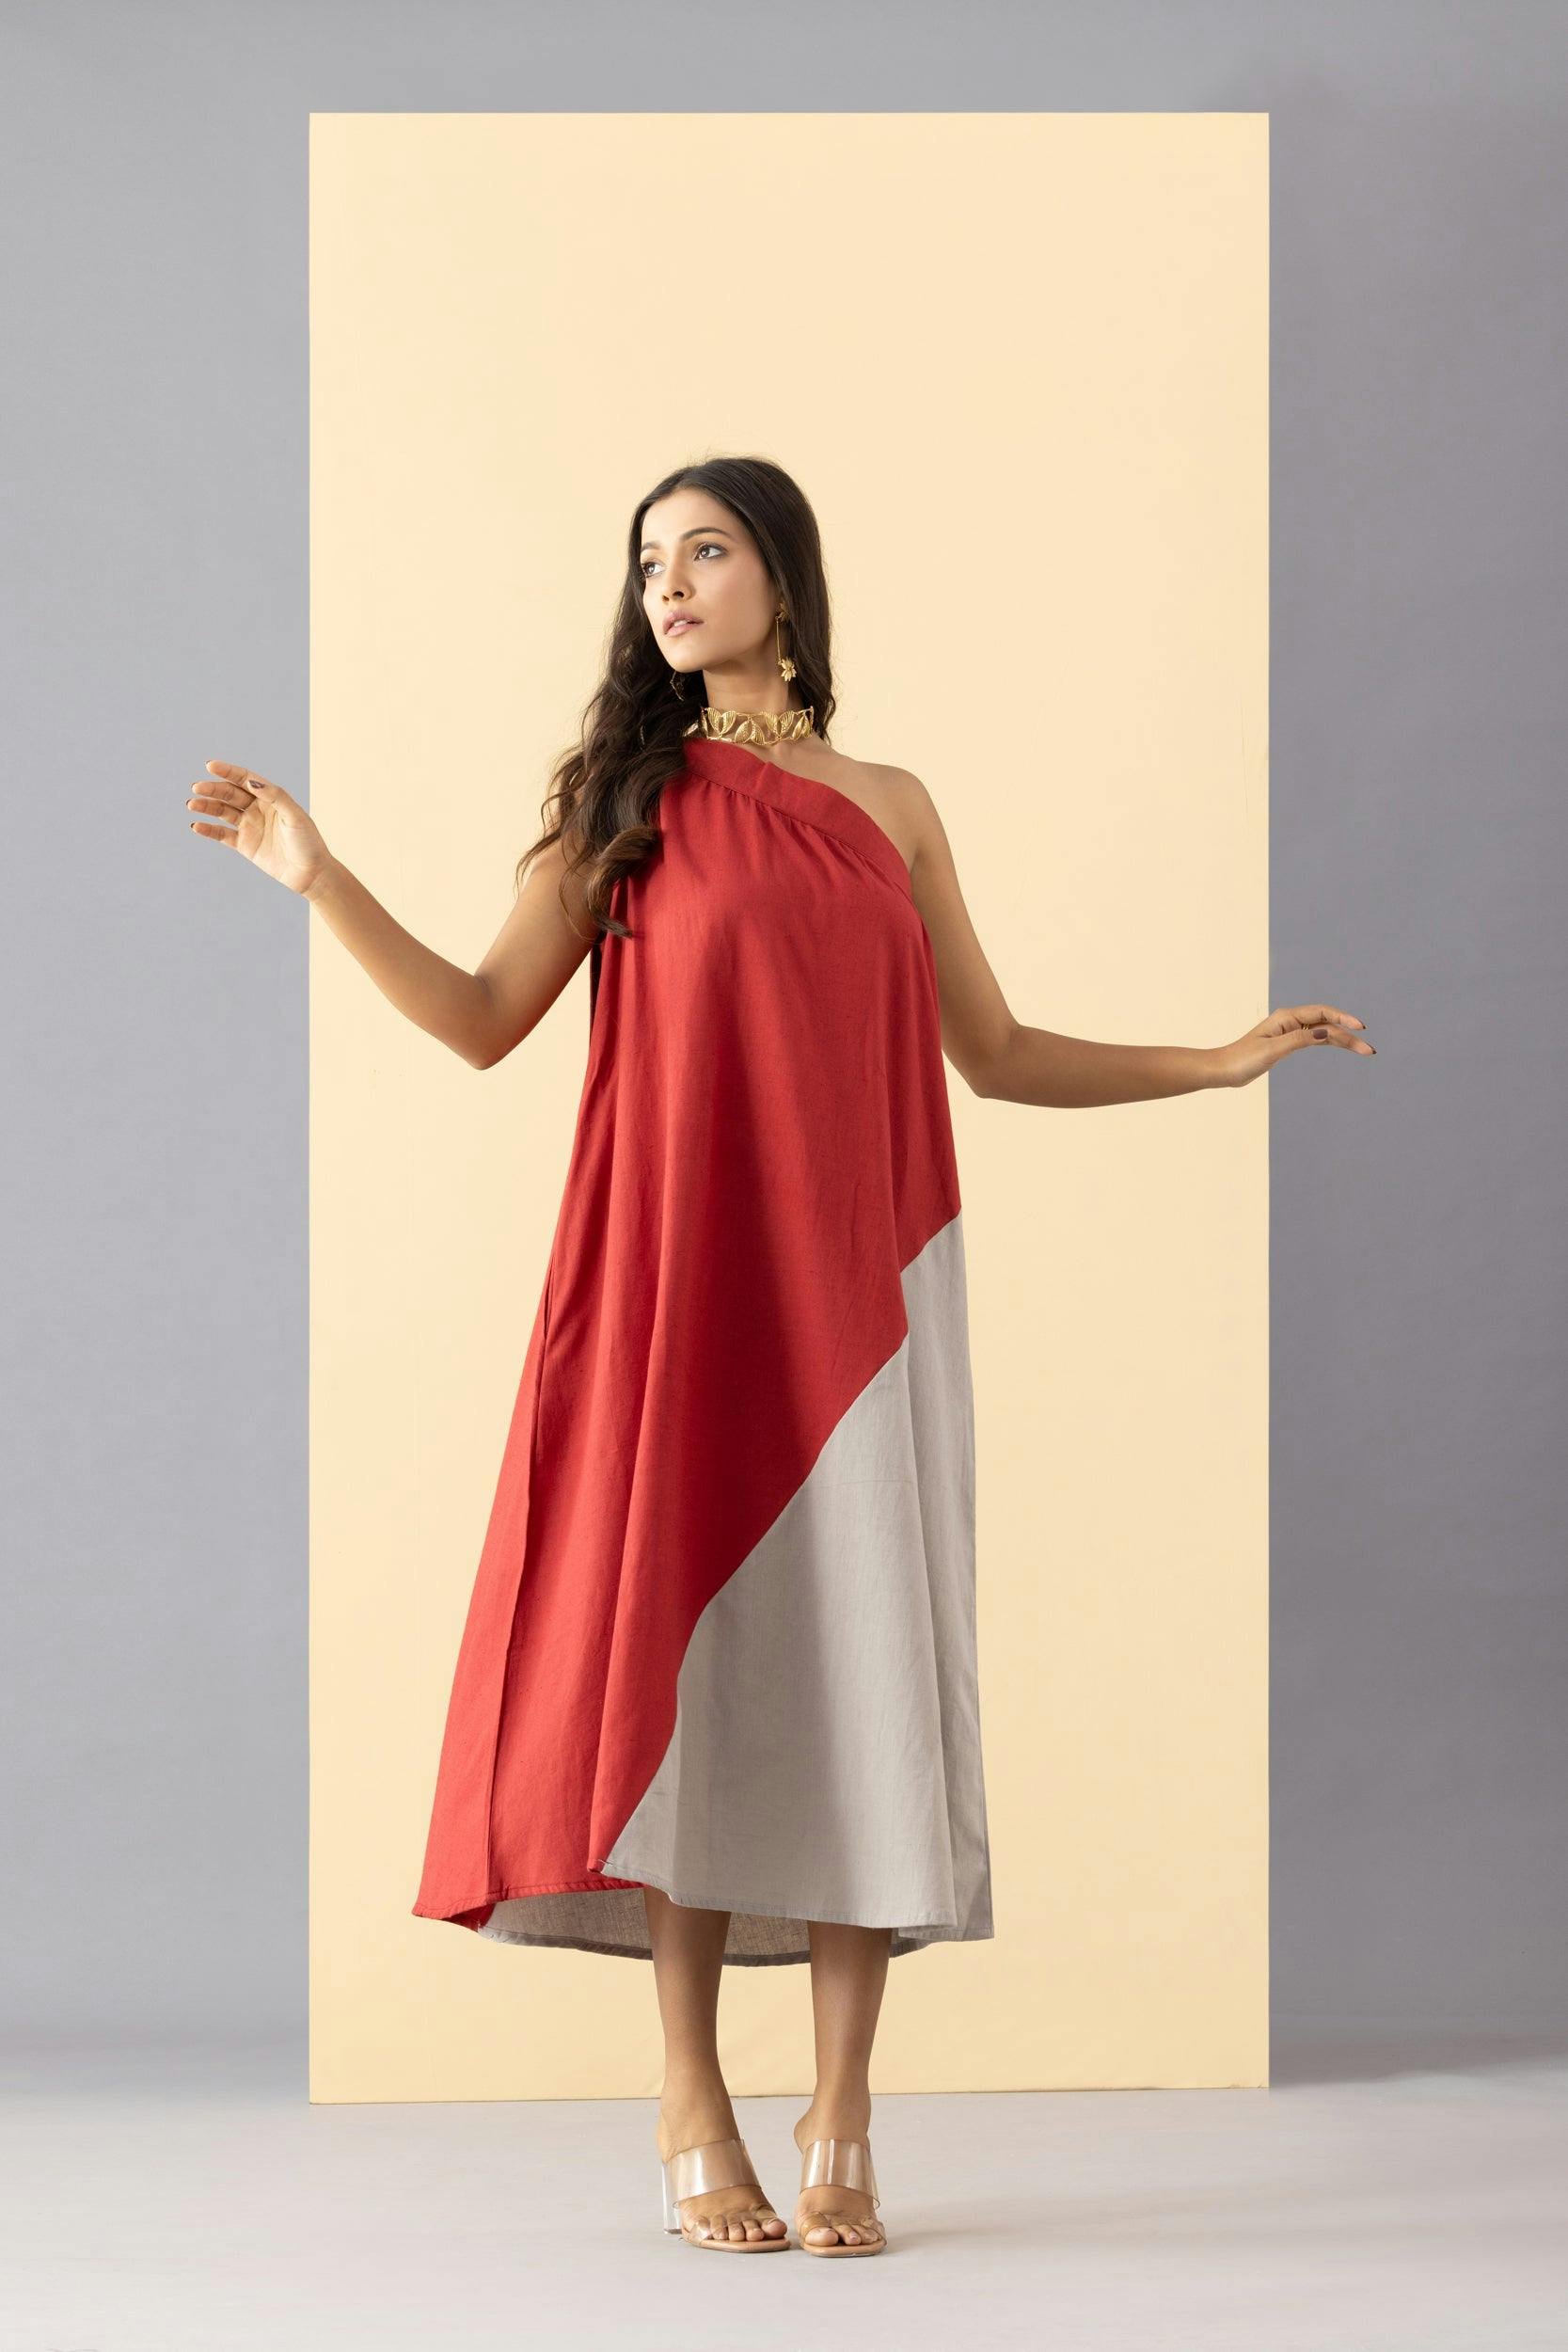 BUNA TIE DRESS, a product by MARKKAH STUDIO